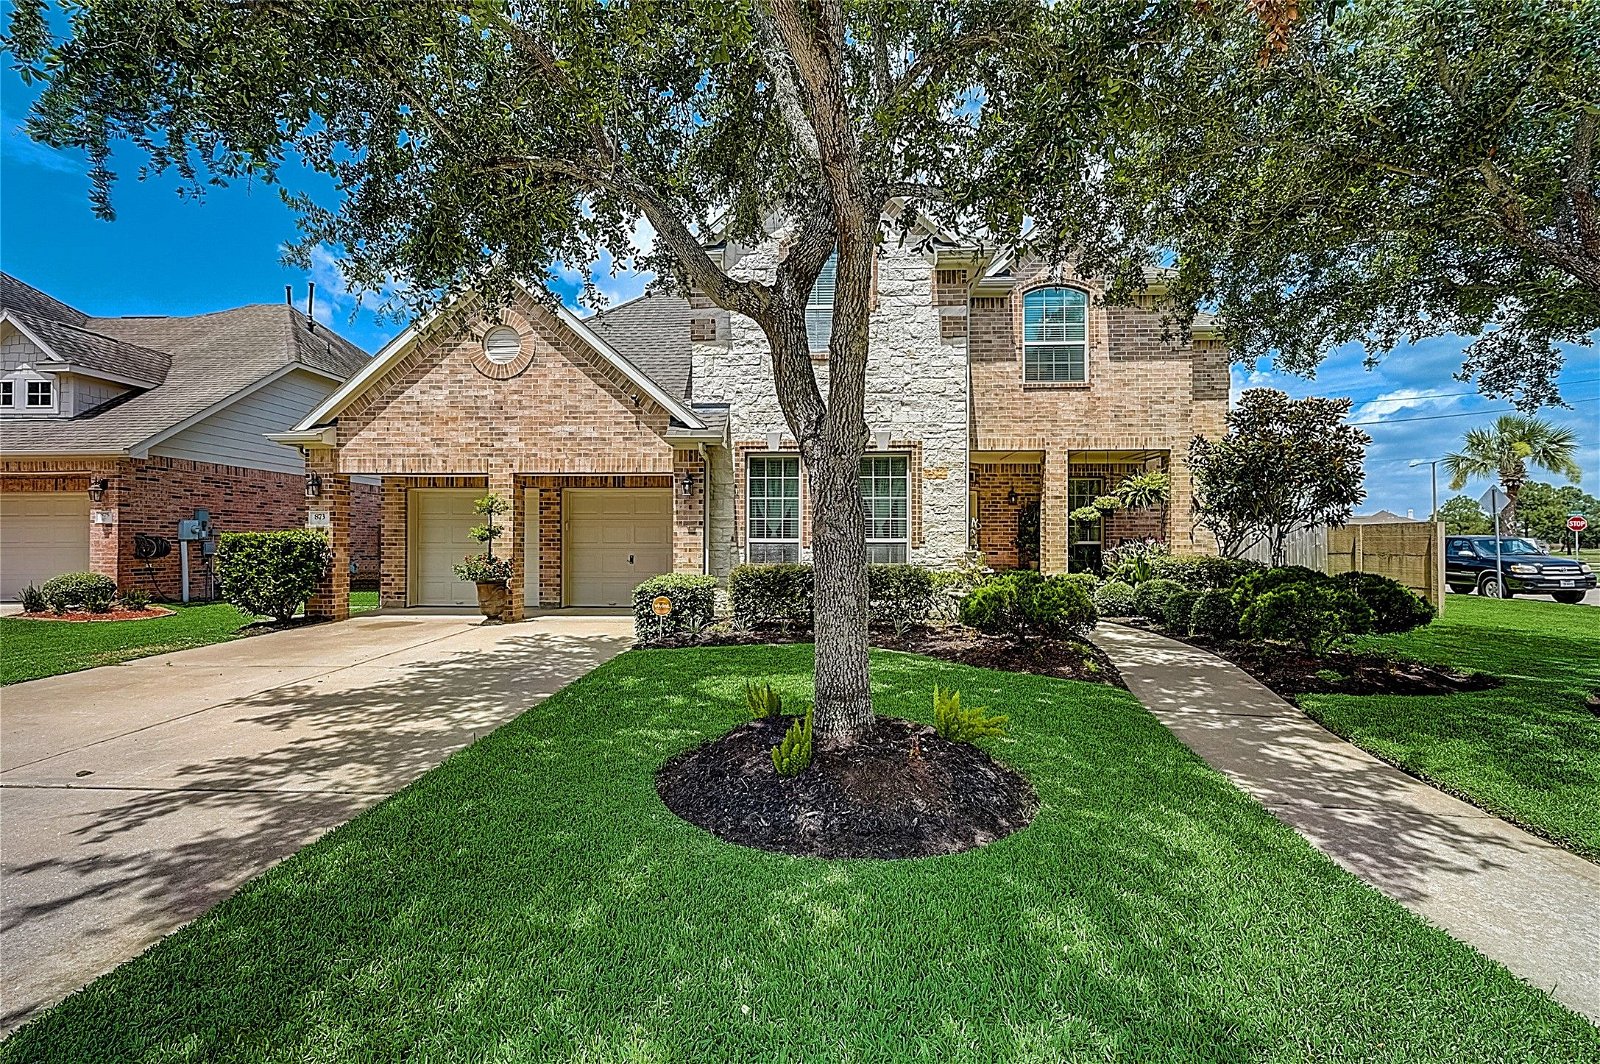 Real estate property located at 873 Pebblebank, Galveston, League City, TX, US